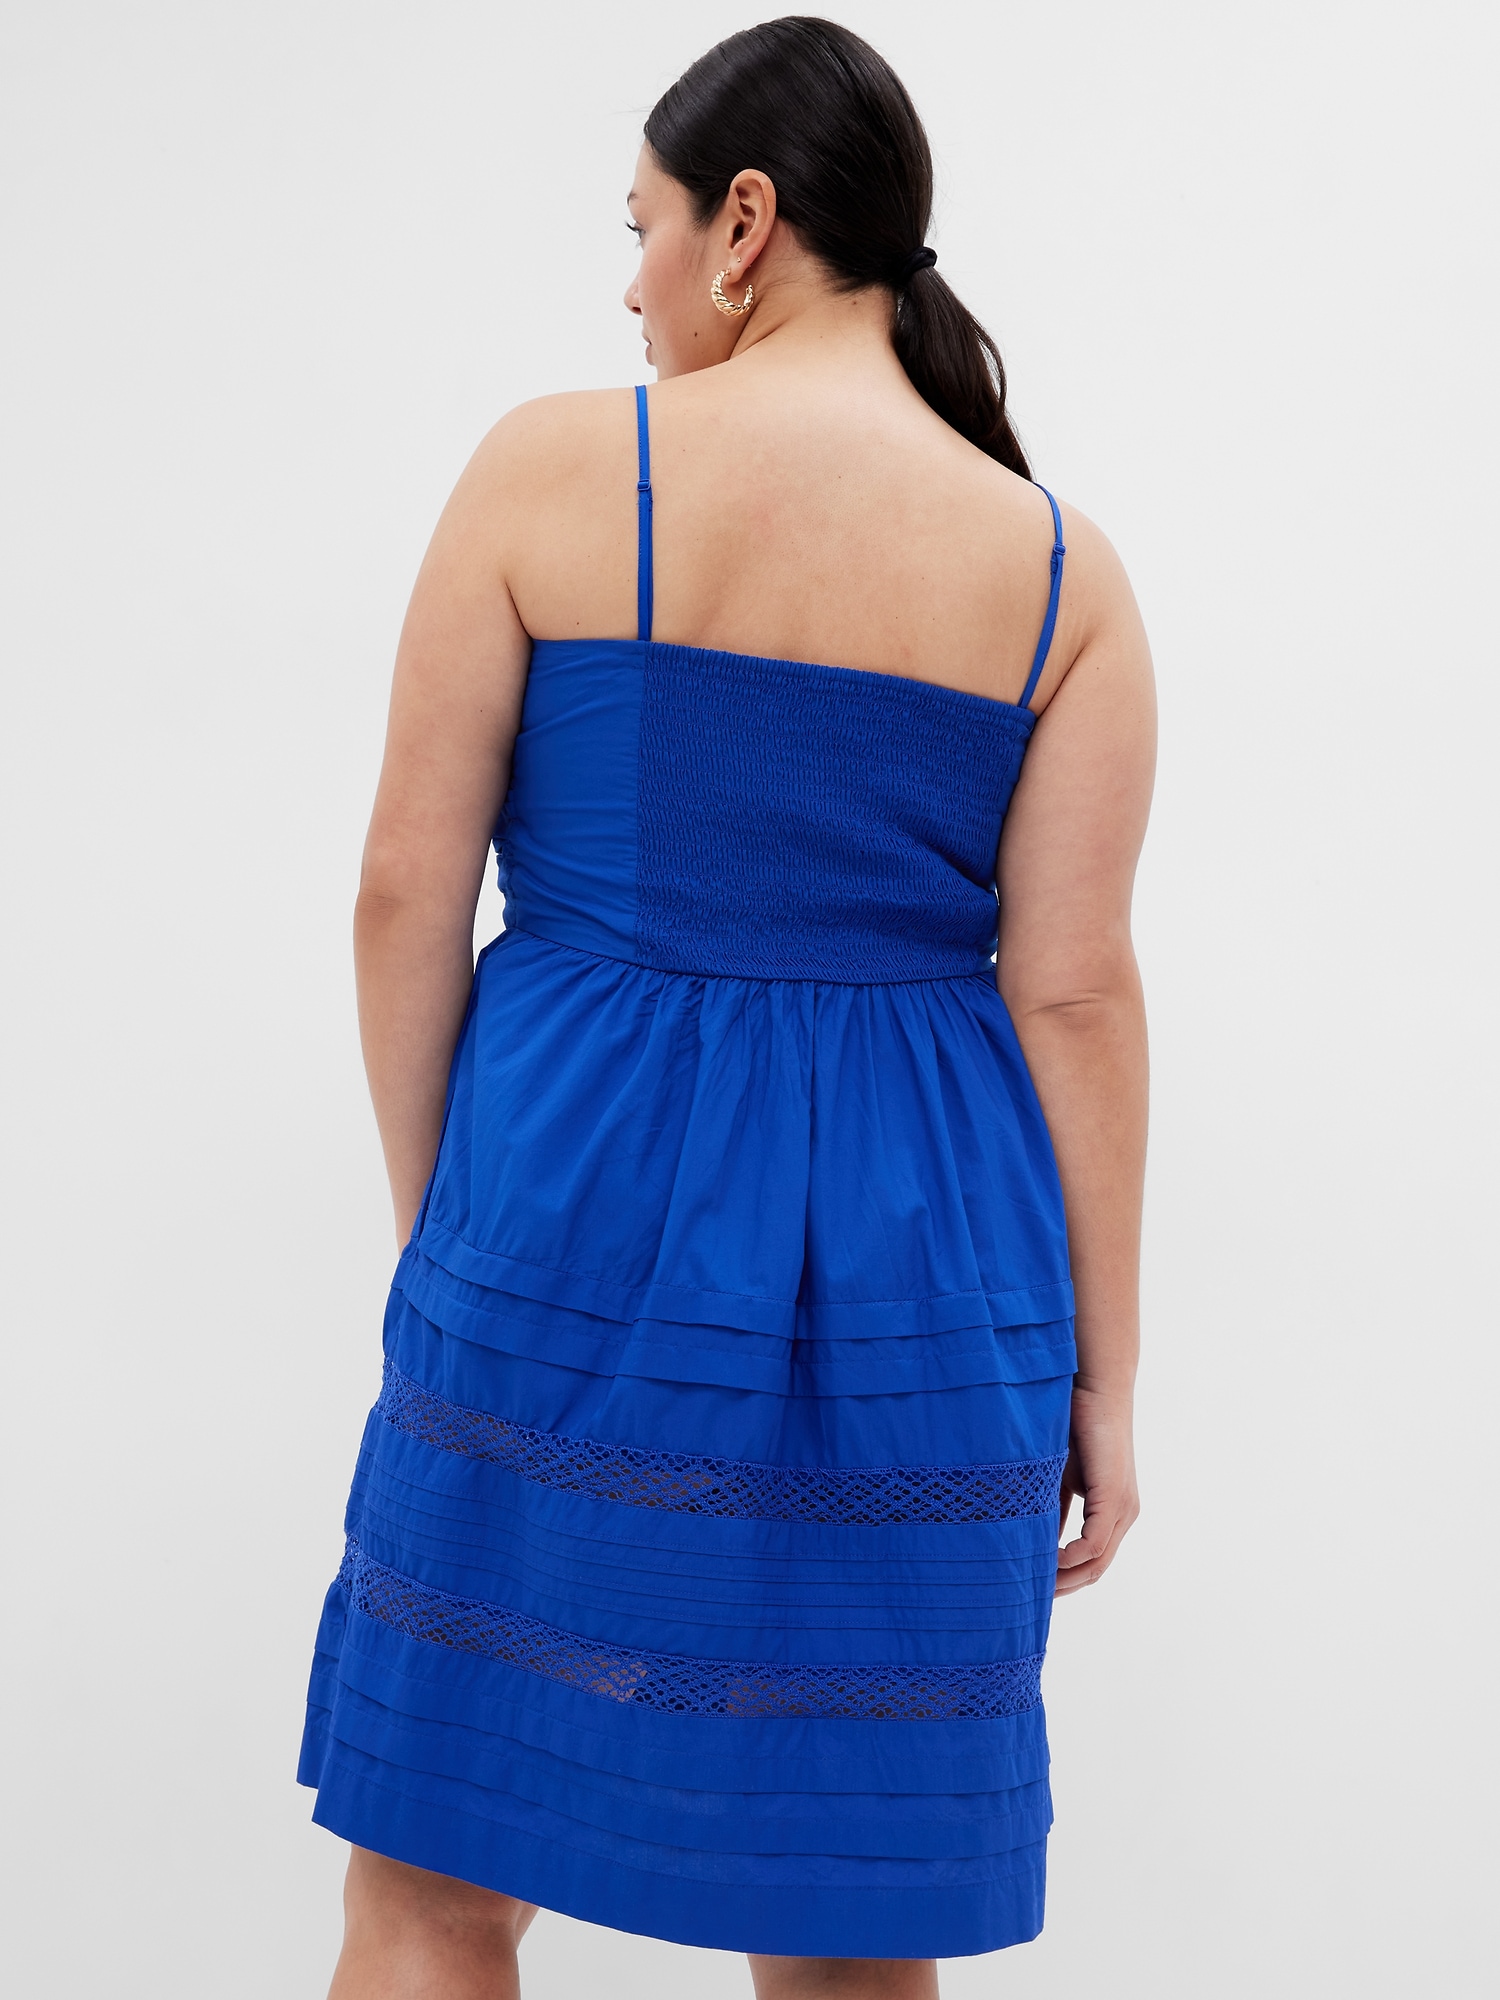 Convertible Strapless Lace Mini Dress | Gap